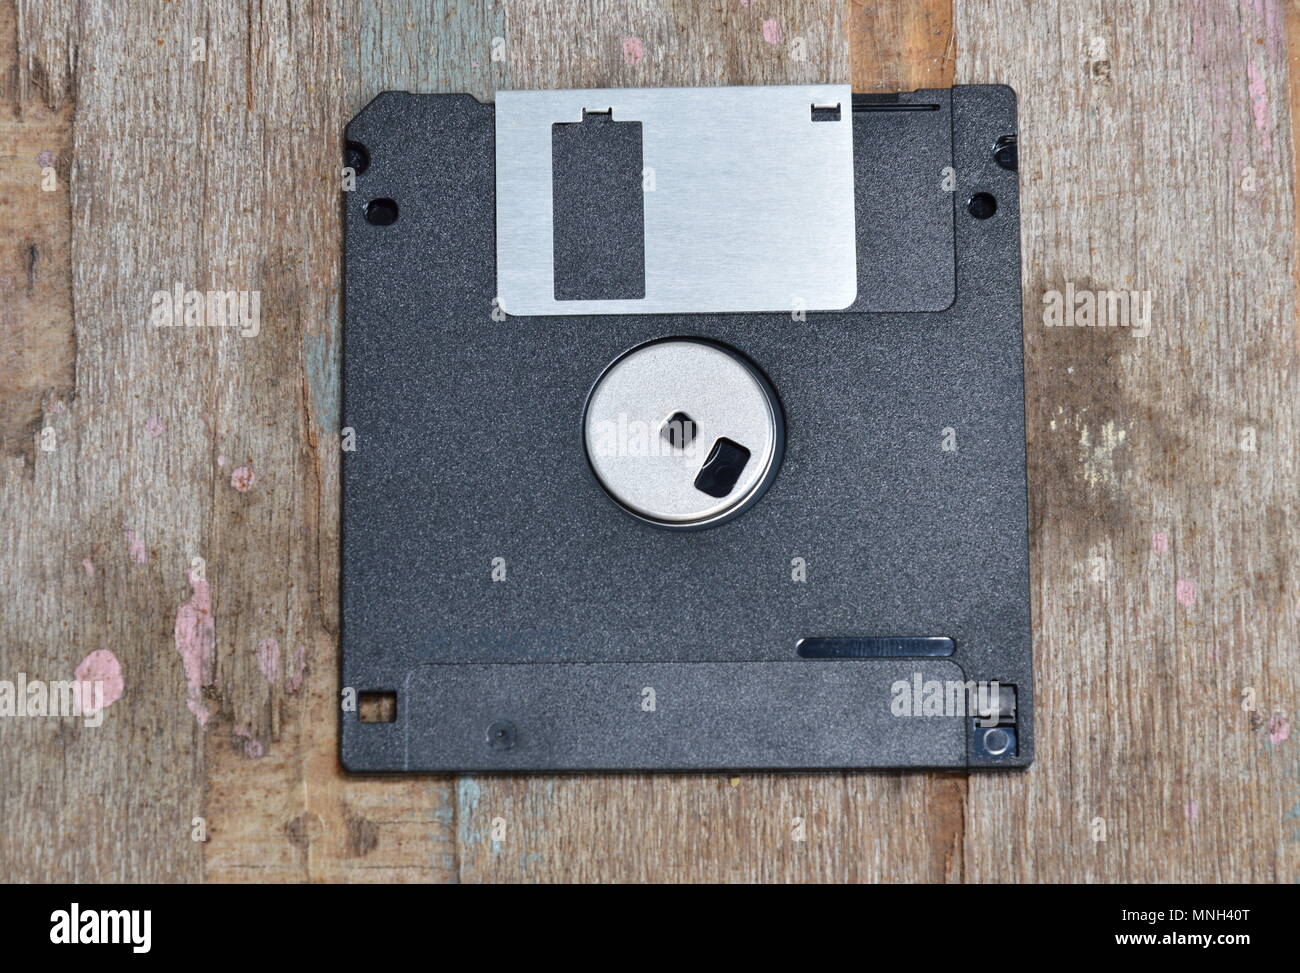 black floppy disk on wood board Stock Photo